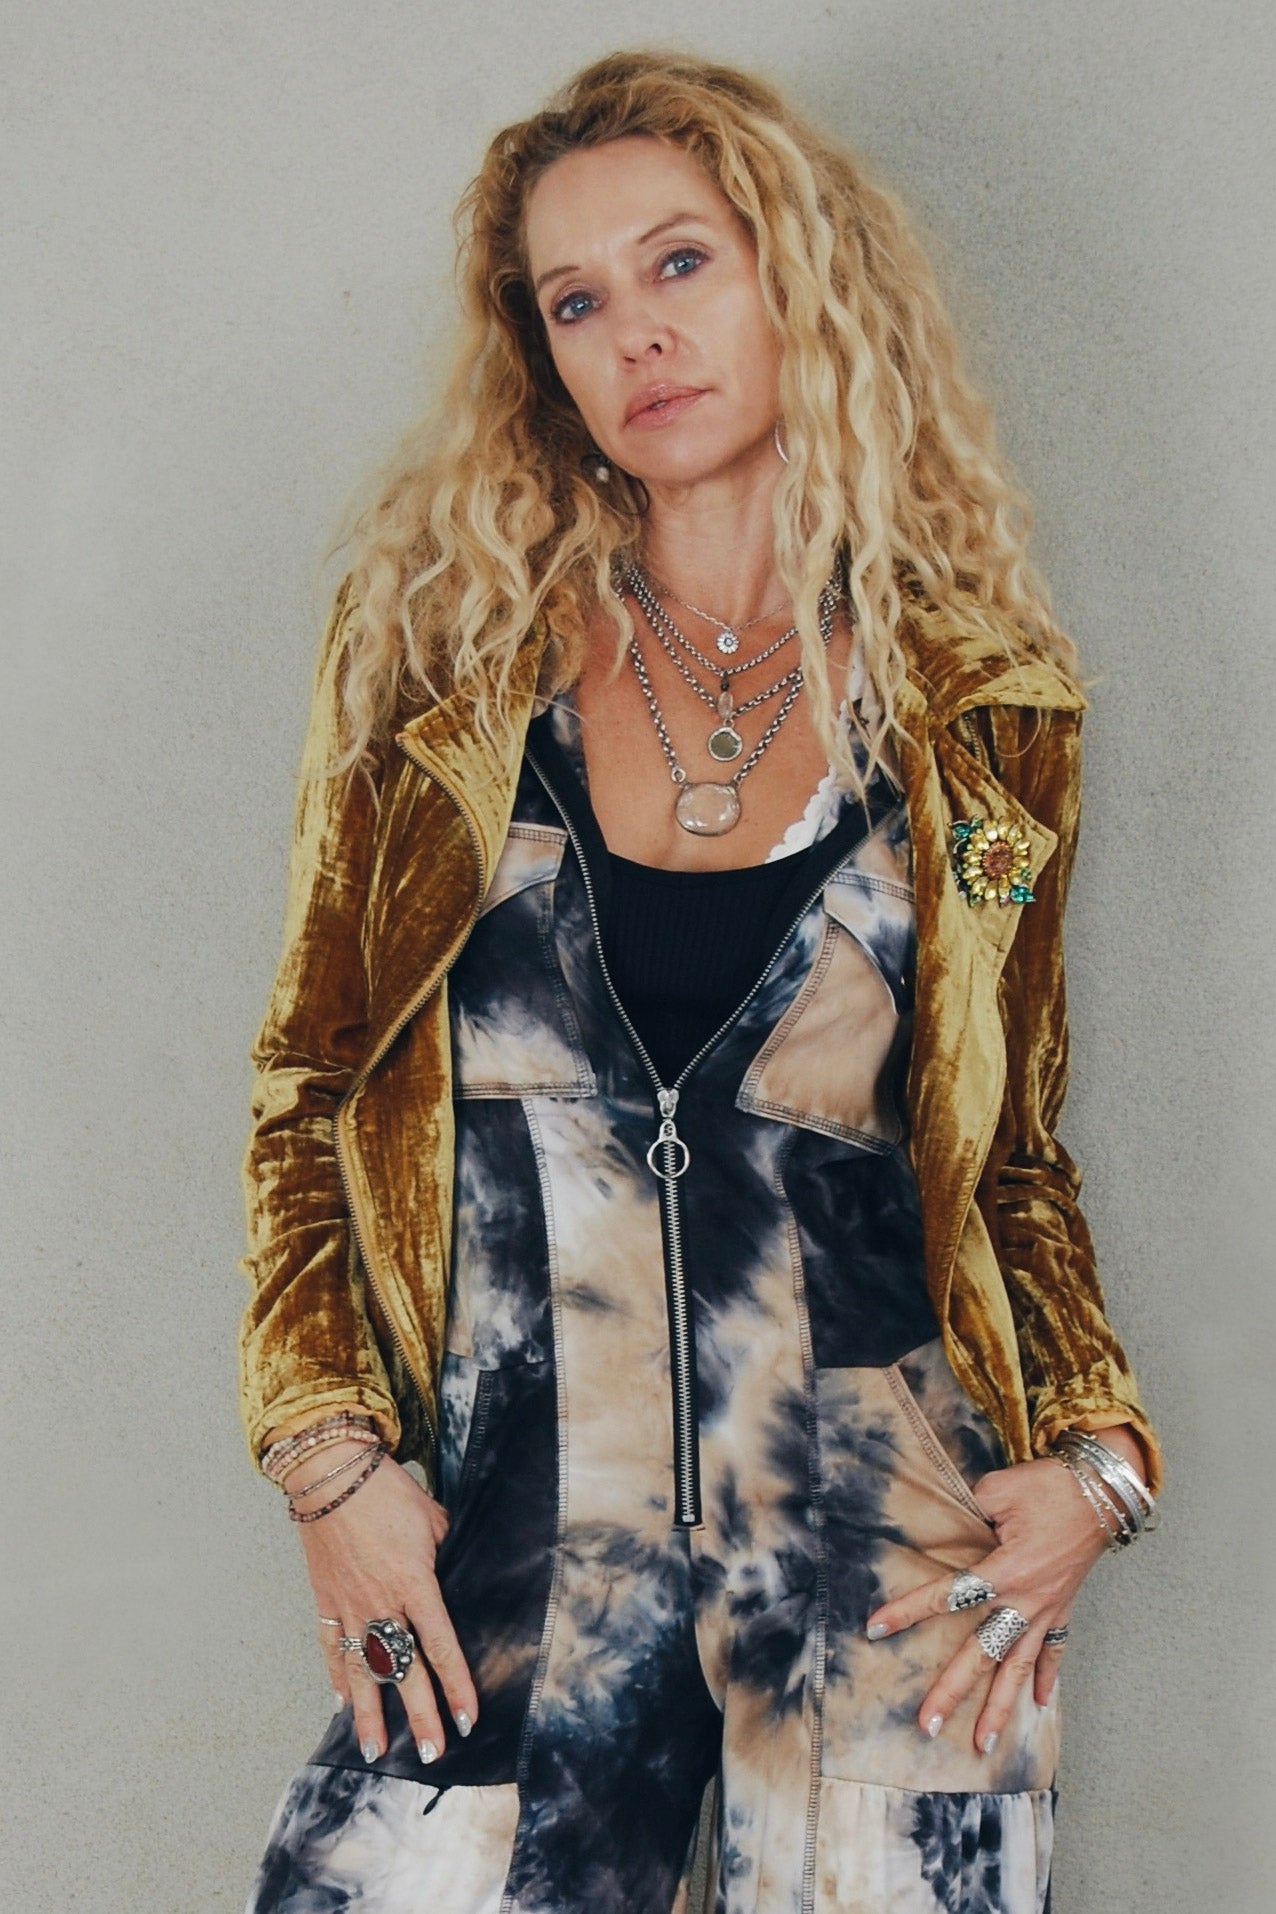 Crushed Panne Jacket in Gold - SpiritedBoutiques Boho Hippie Boutique Style Jacket, BIZ